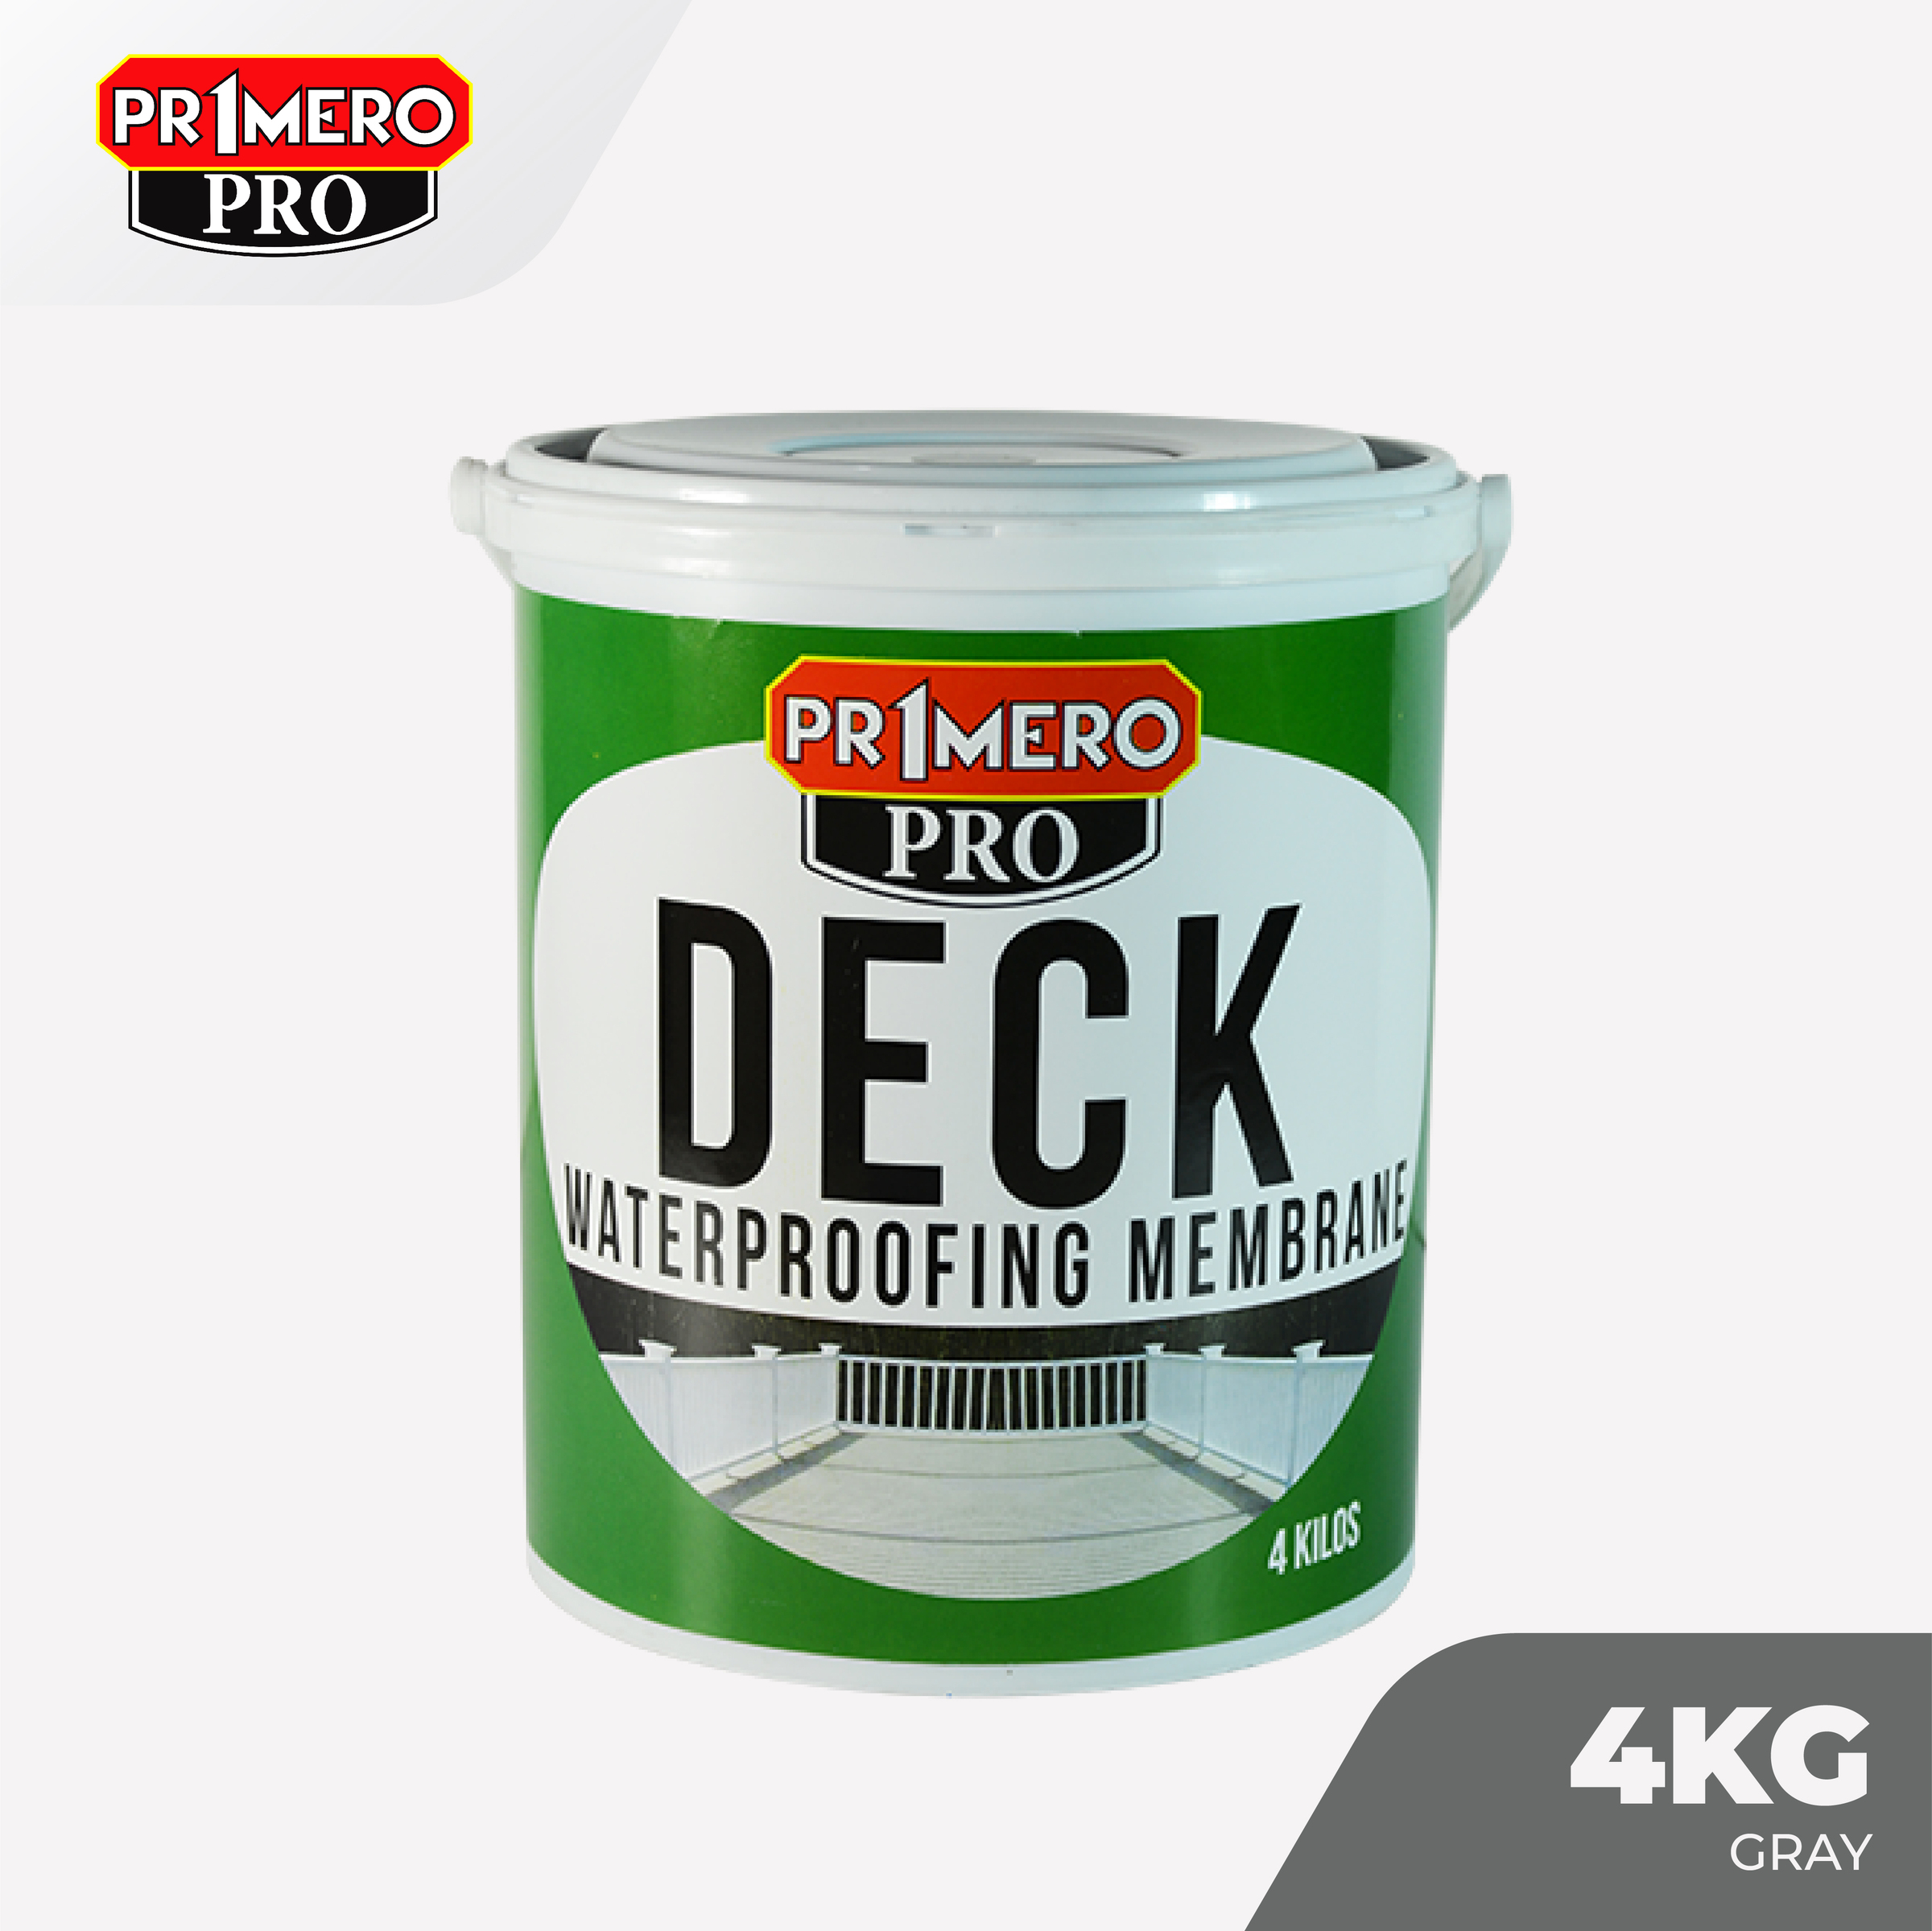 Primero Pro Deck Waterproofing Membrane Grey - 4kg